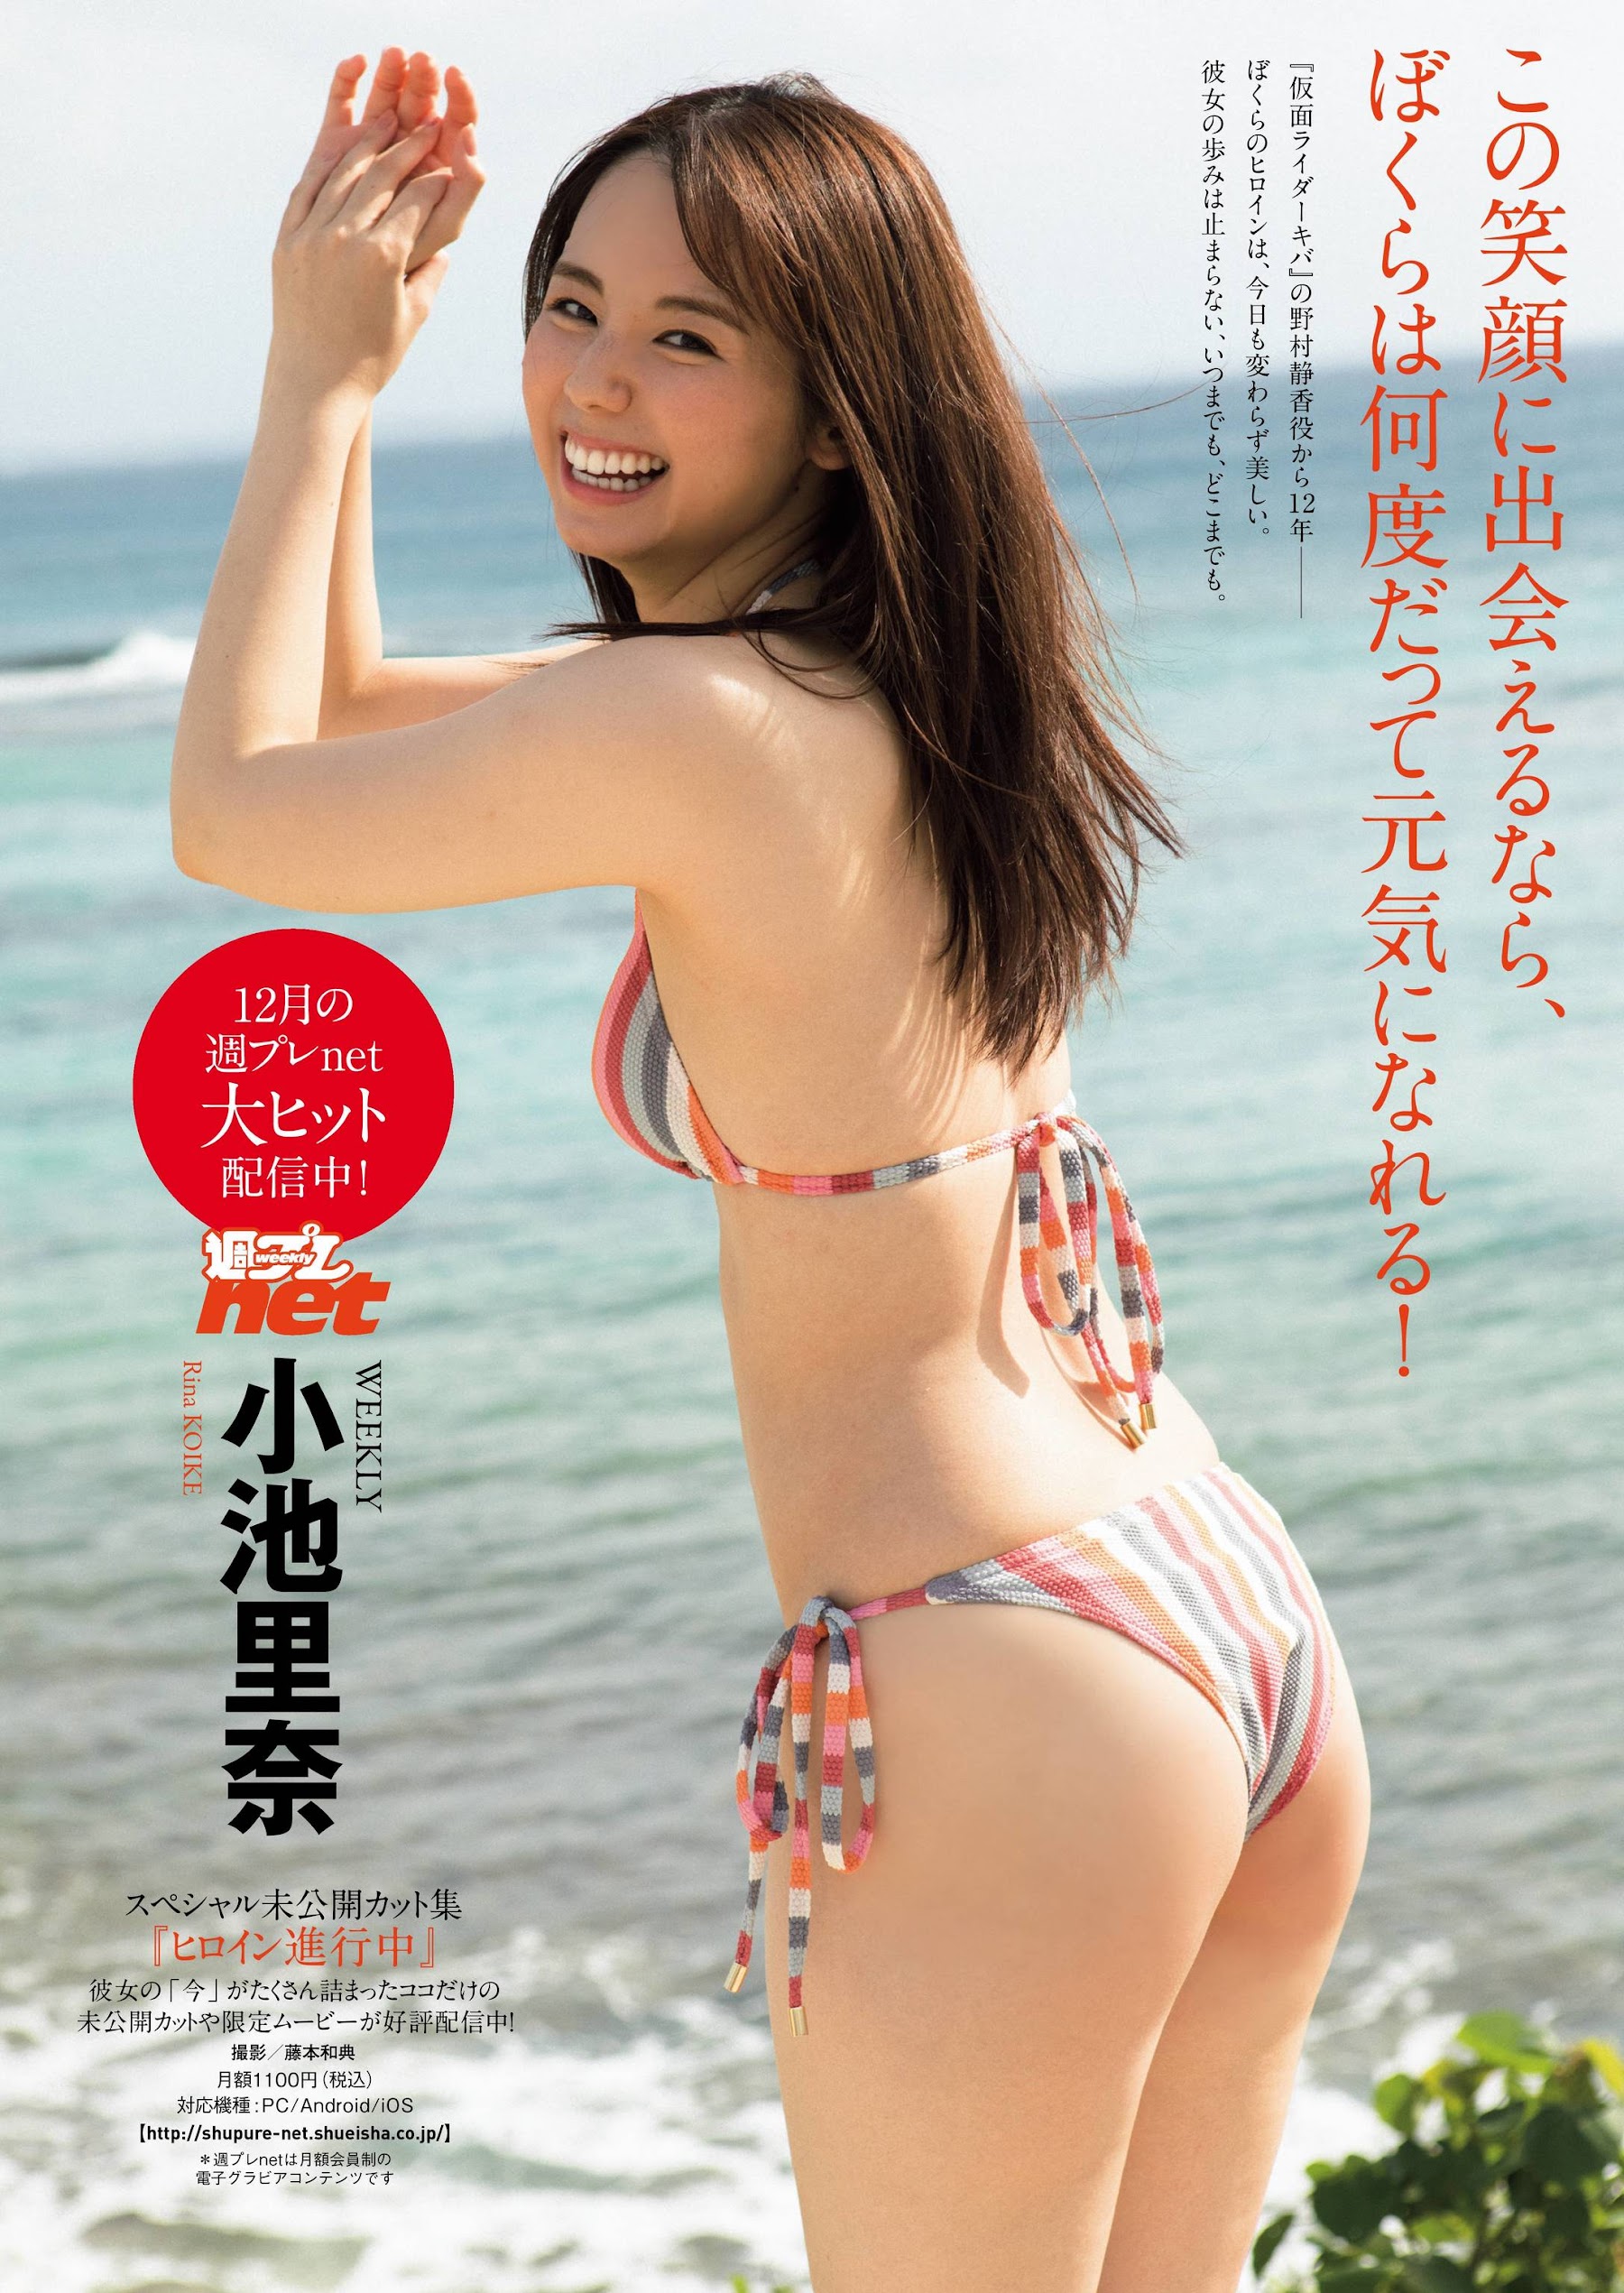 Weekly Playboy 12 28 年12月の週プレnet 小池里奈 Newsグラビアアイドル Net